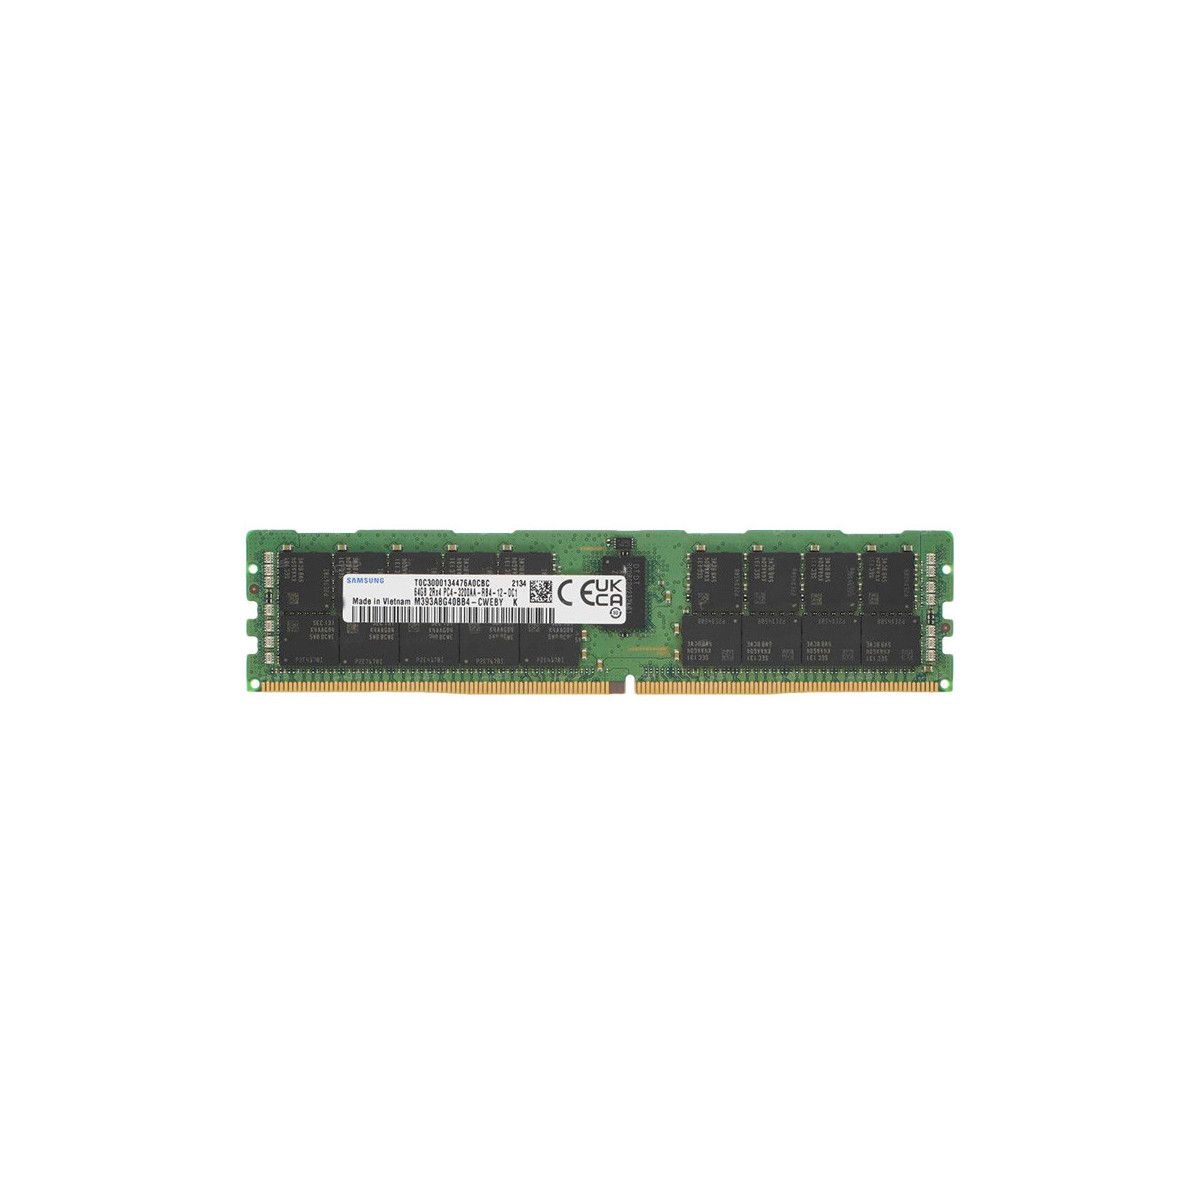 P2MYX-MS - Memstar 1x 64GB DDR4-3200 RDIMM PC4-25600R - Memorie OEM compatibilă Mem-Star 1 - Memstar 